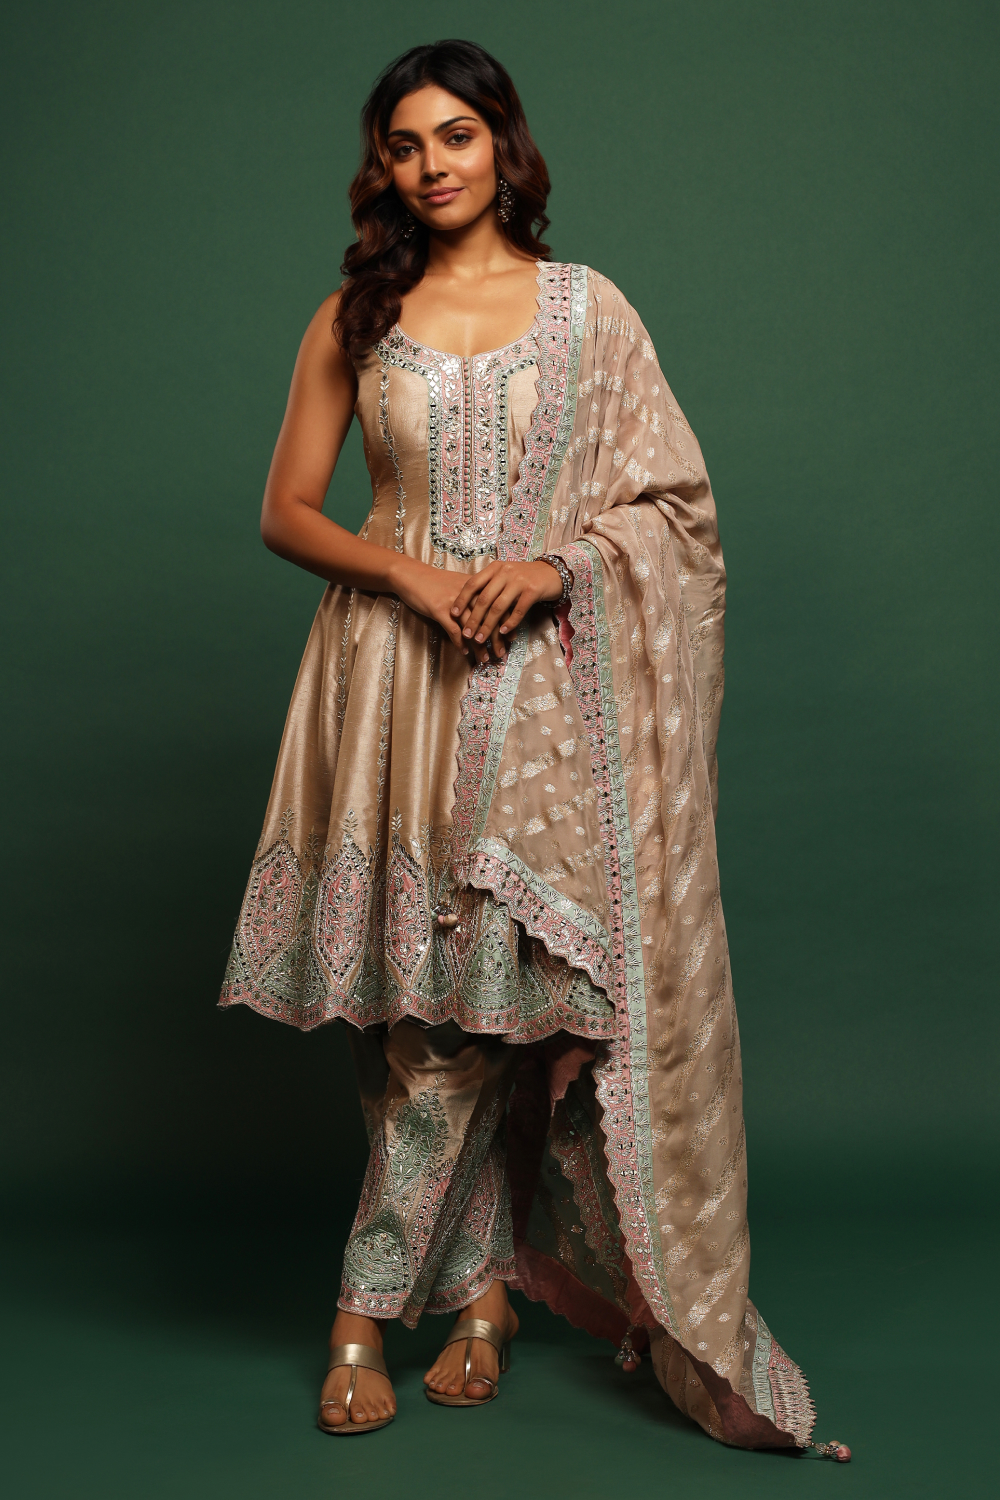 Elegant Straight Pant Suit Salwar Kameez - Sleek & Modern - Seasons India